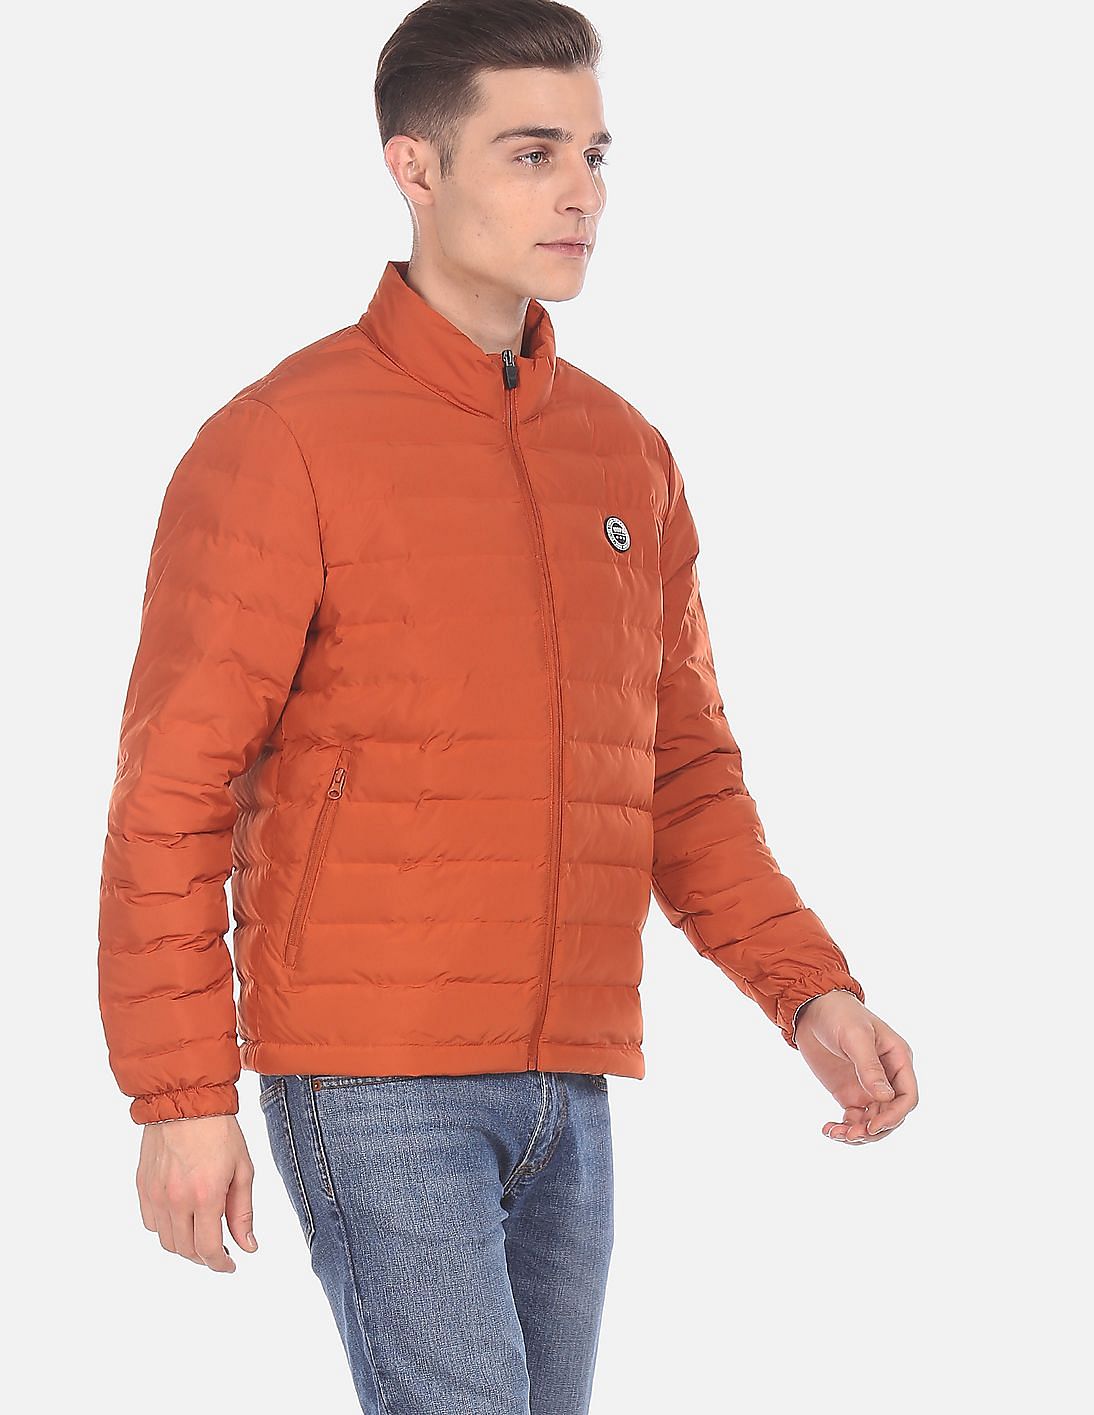 Buy U.S. Polo Assn. Men Orange Zip Up Quilted Jacket - NNNOW.com